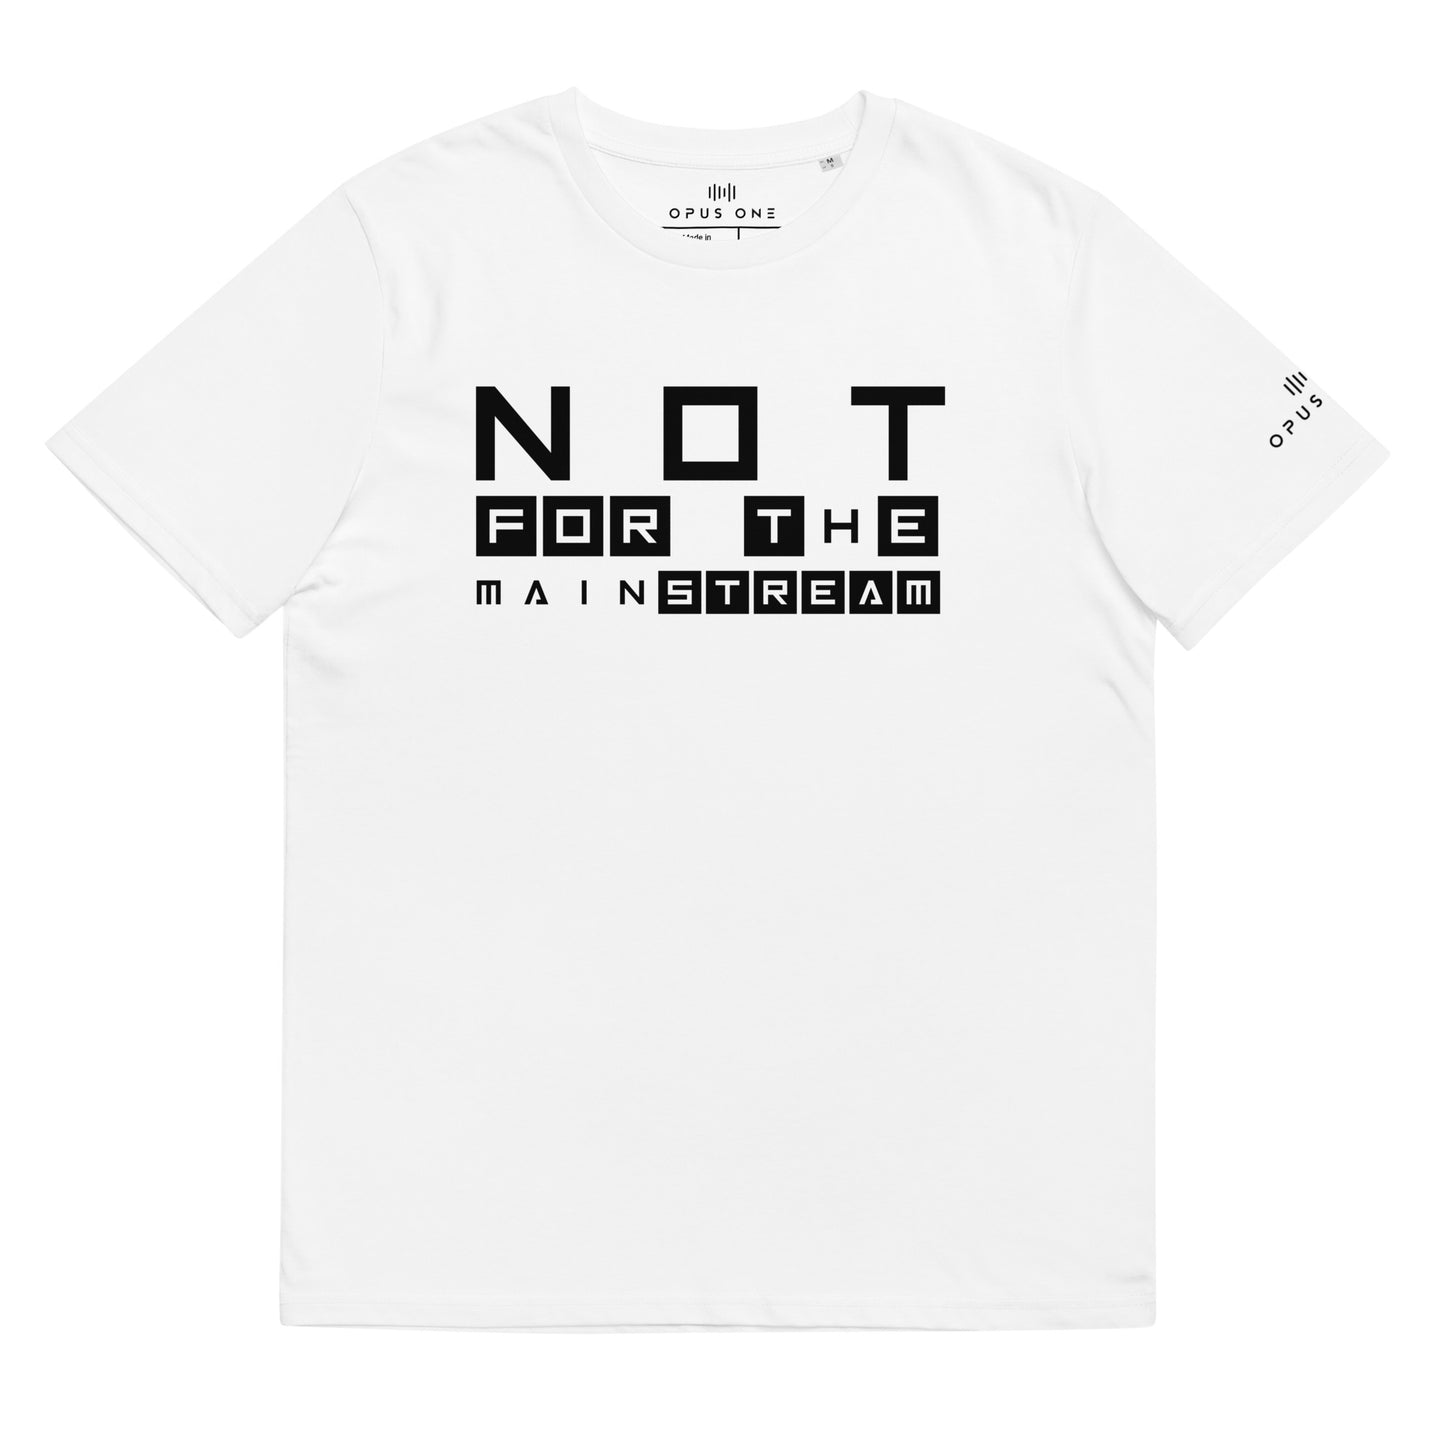 NFTM (v1) Unisex organic cotton t-shirt (Black Text)